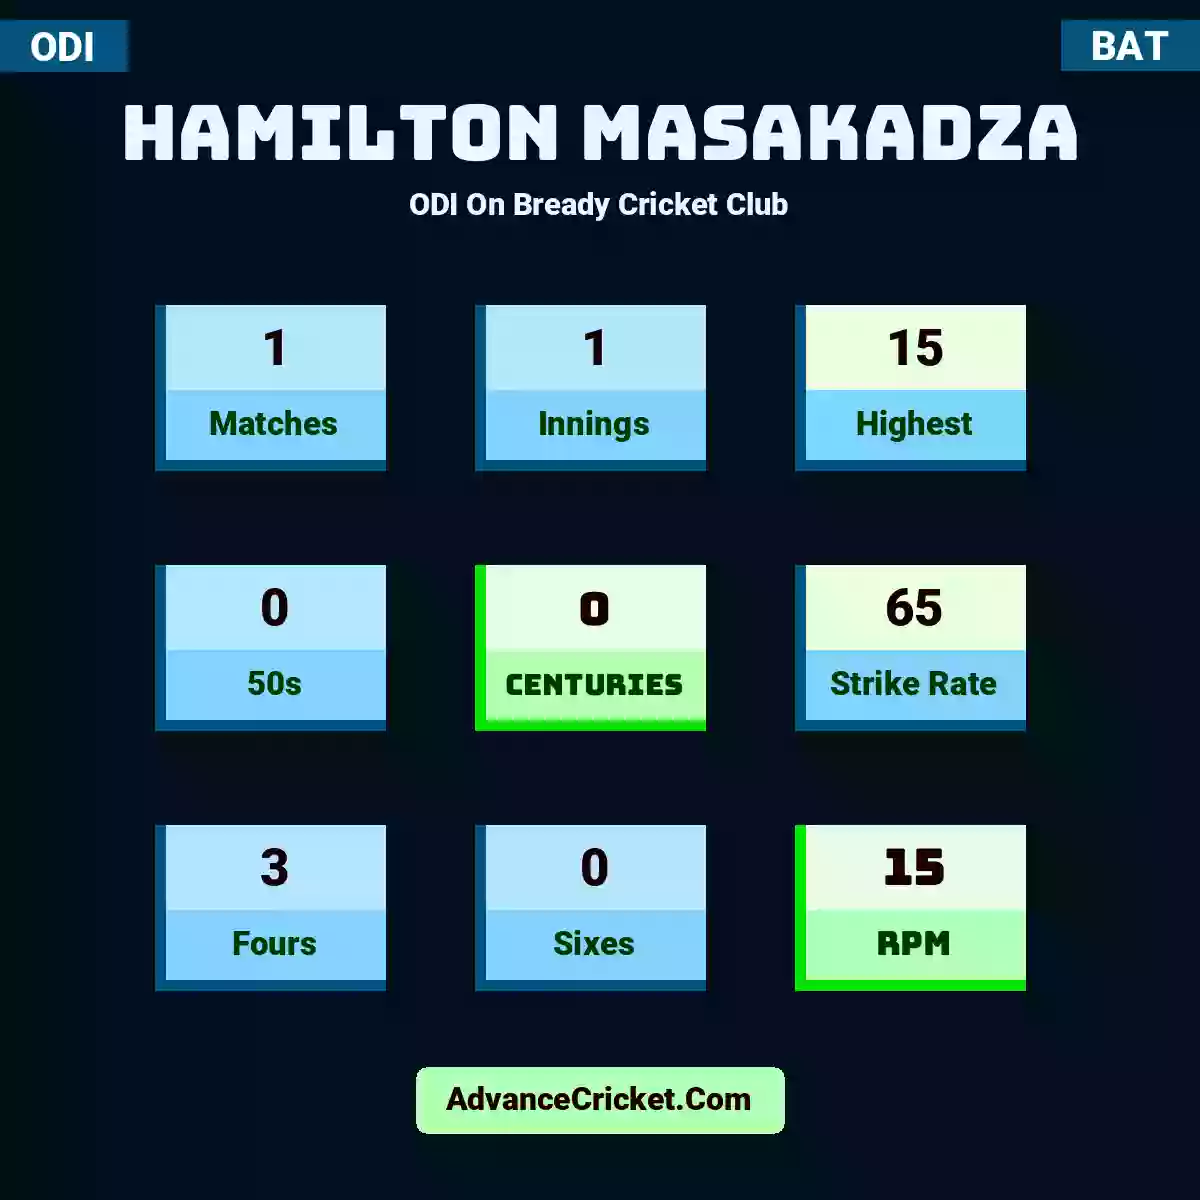 Hamilton Masakadza ODI  On Bready Cricket Club, Hamilton Masakadza played 1 matches, scored 15 runs as highest, 0 half-centuries, and 0 centuries, with a strike rate of 65. H.Masakadza hit 3 fours and 0 sixes, with an RPM of 15.